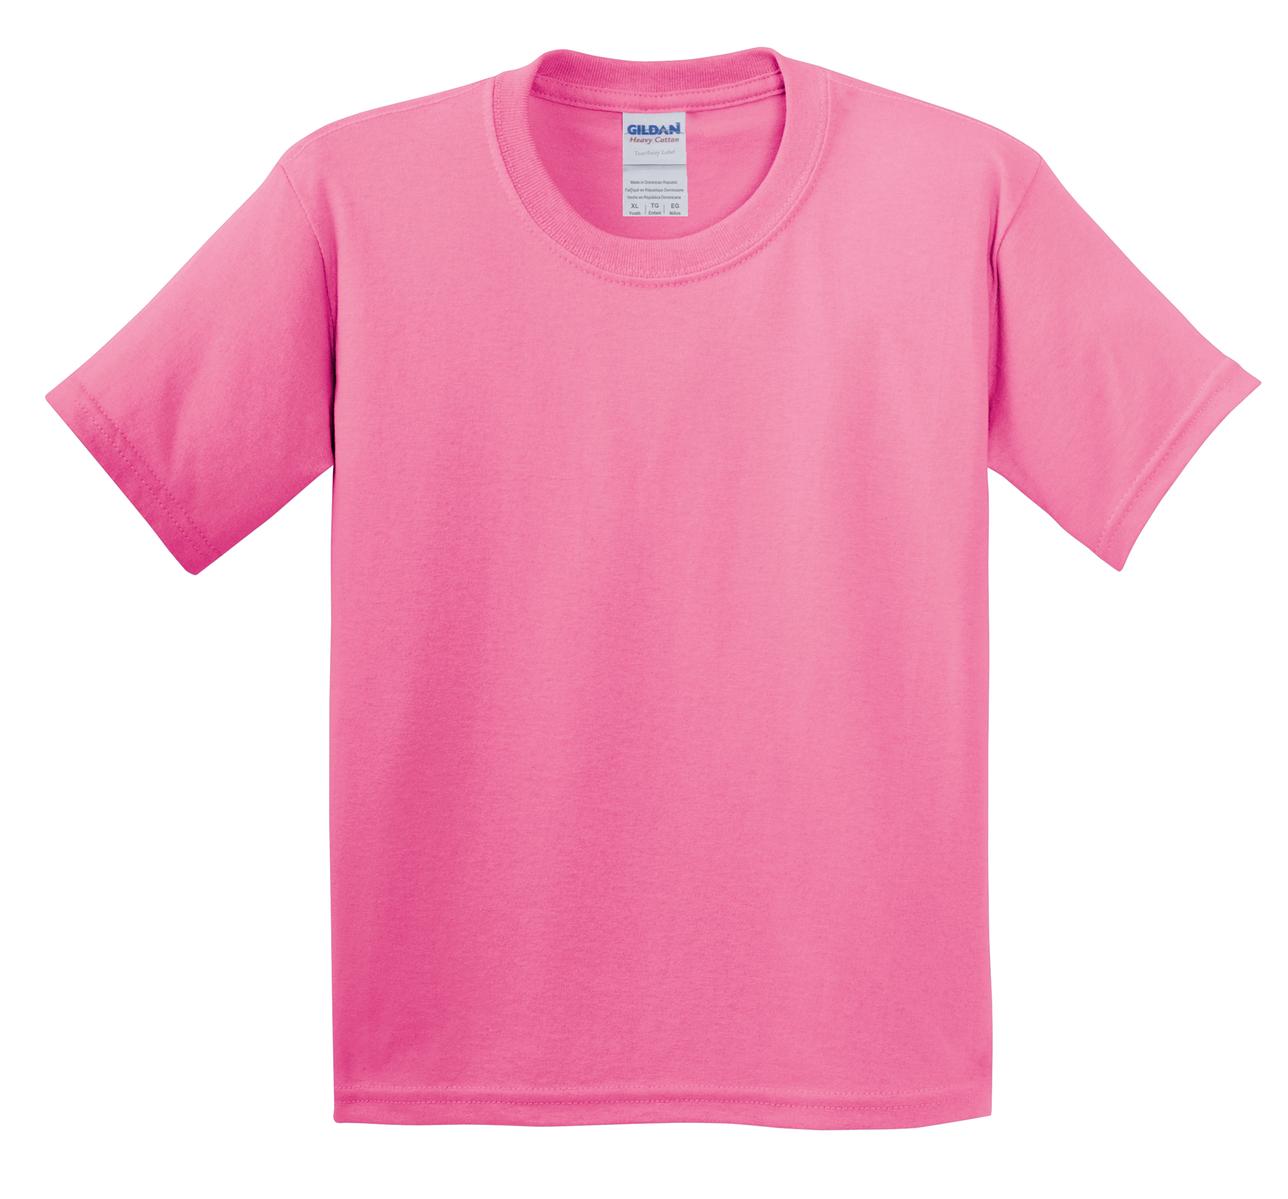 Artix - Big Girls T-Shirts and Tank Tops, up to Big Girls Size 24 - San Francisco - image 4 of 5